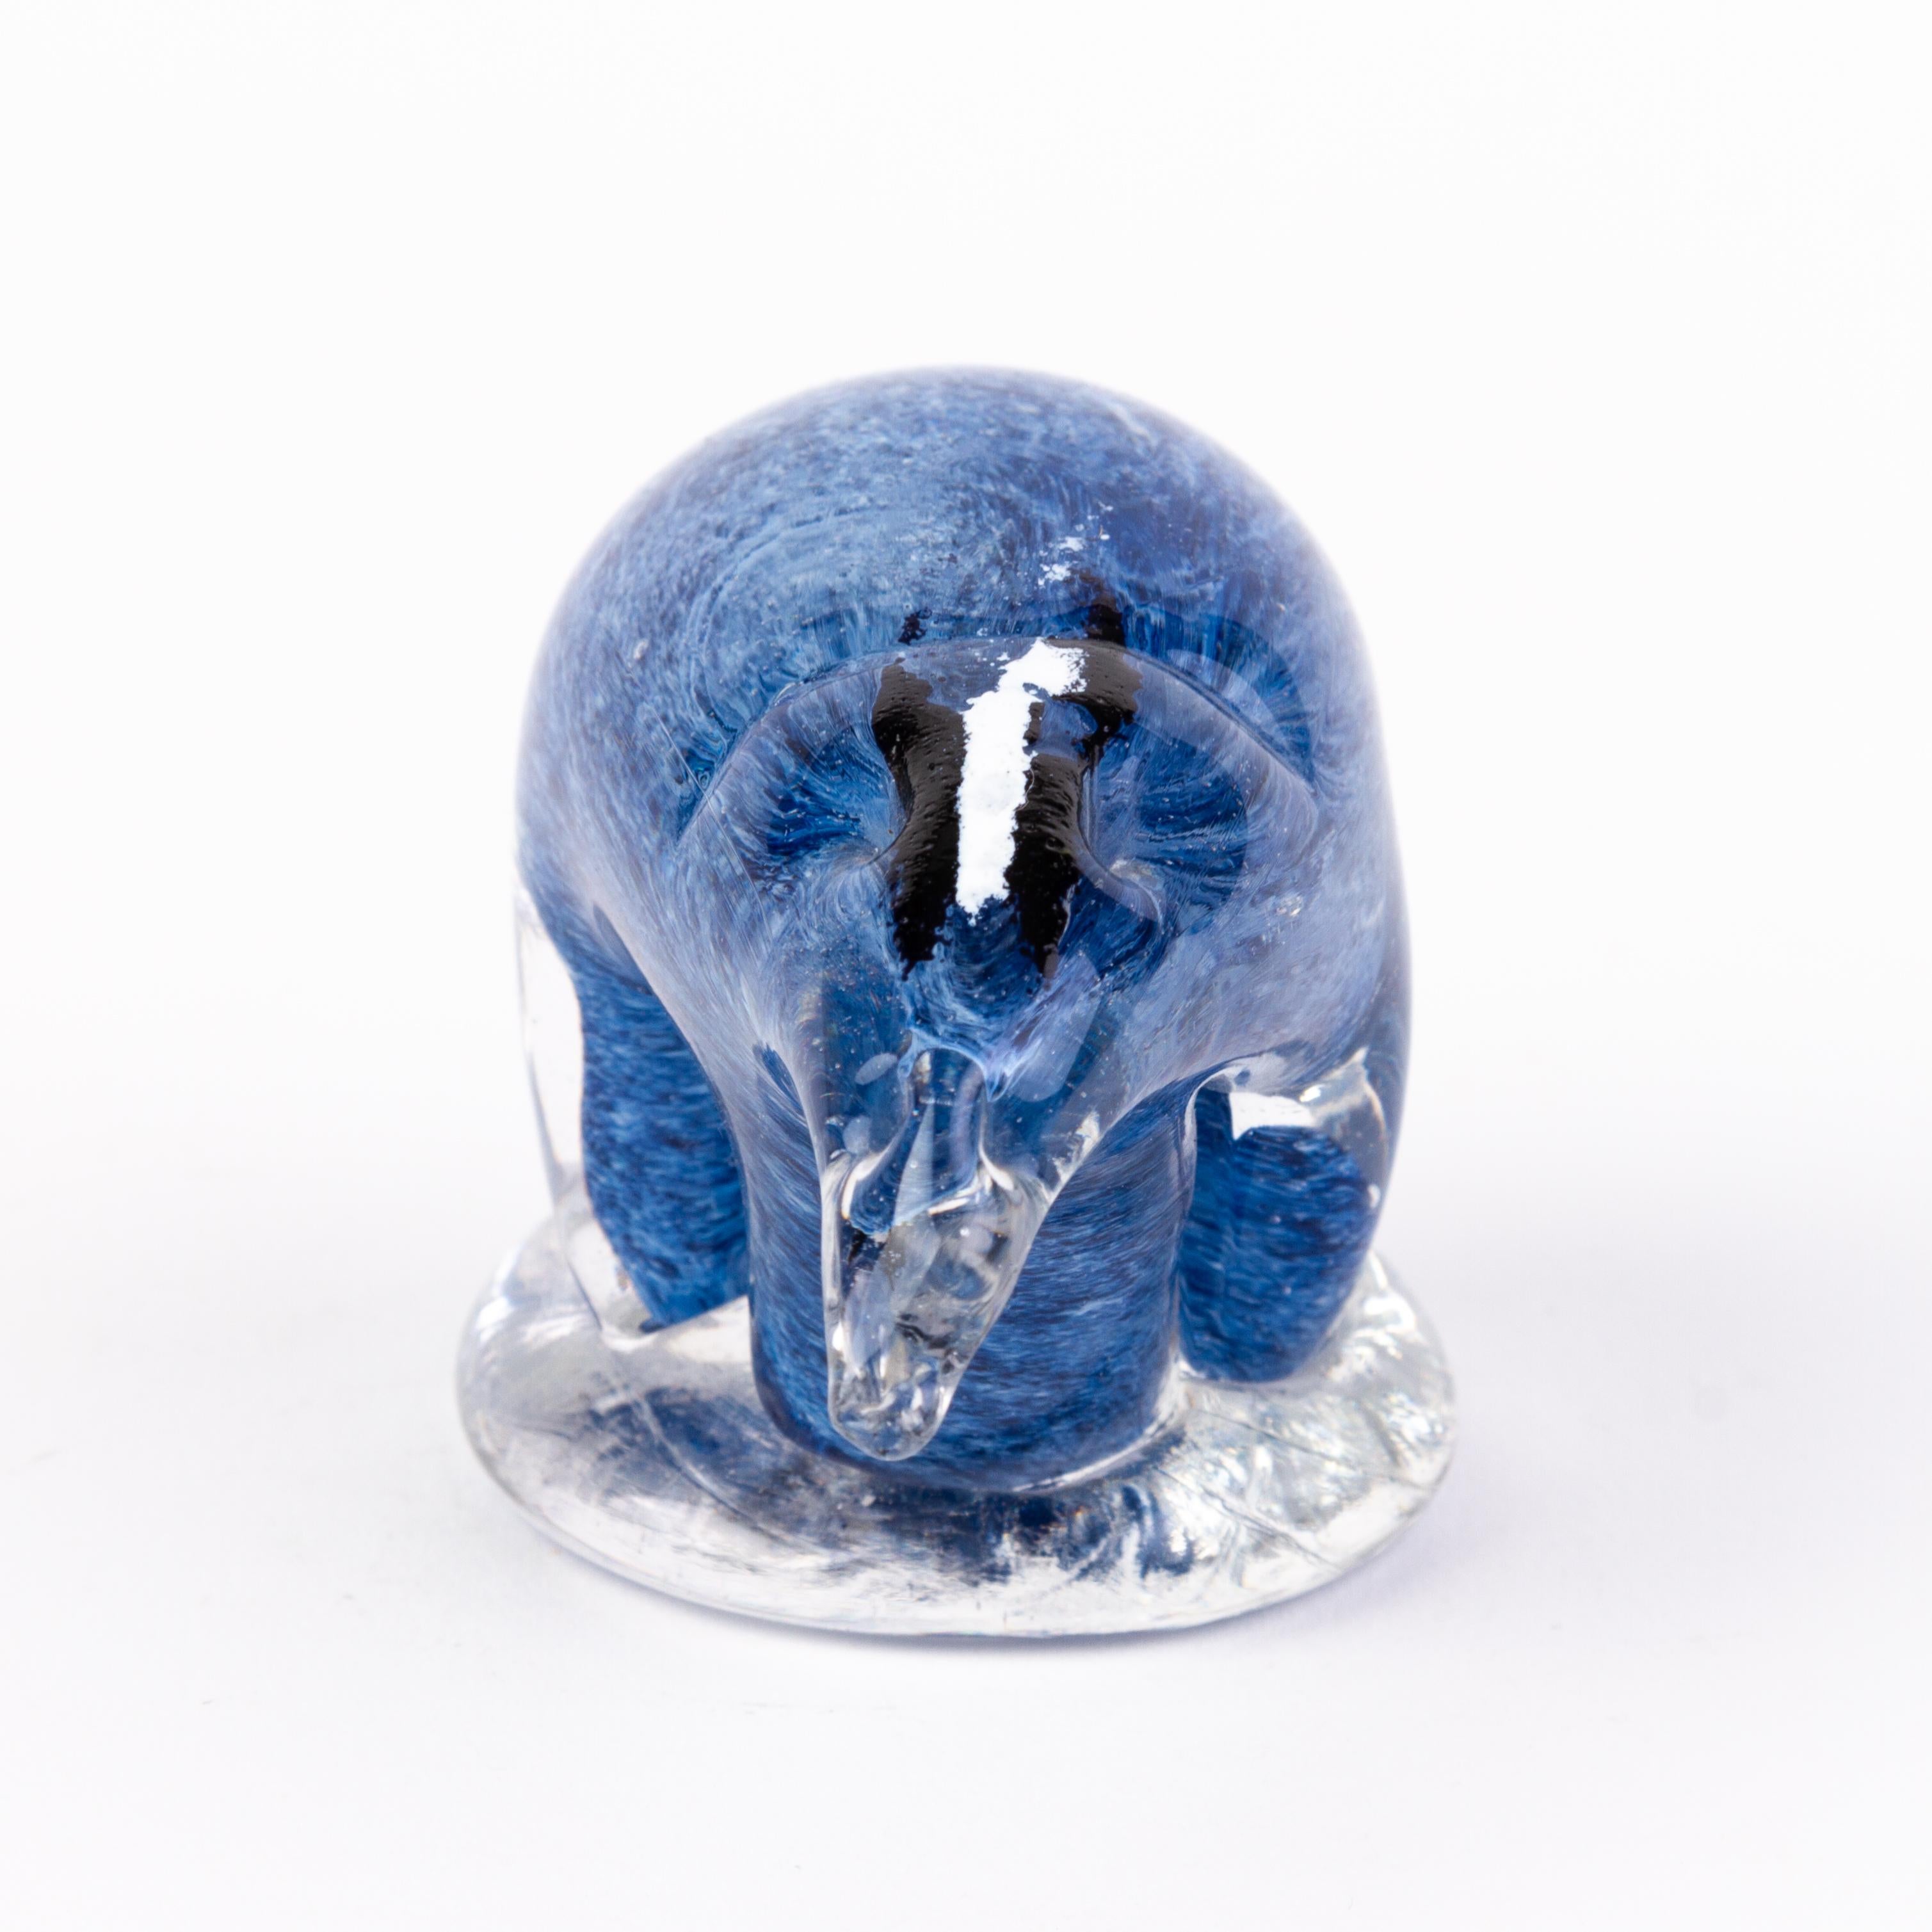 Murano Venetian Glass Designer Sculpture Polar Bear 
Good condition
Free international shipping.